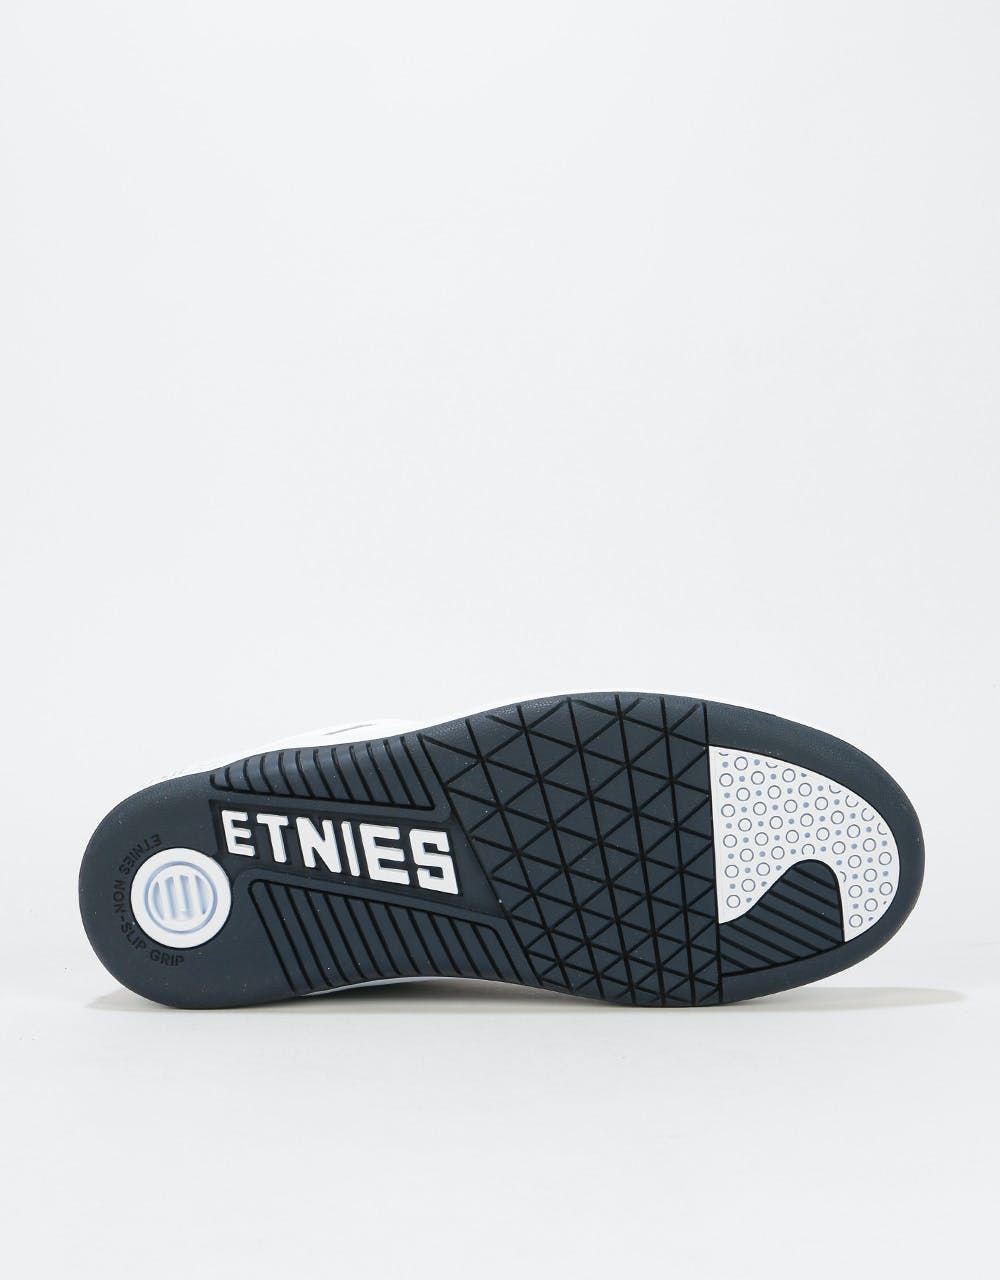 Etnies Senix Lo Skate Shoes - White/Navy/Red